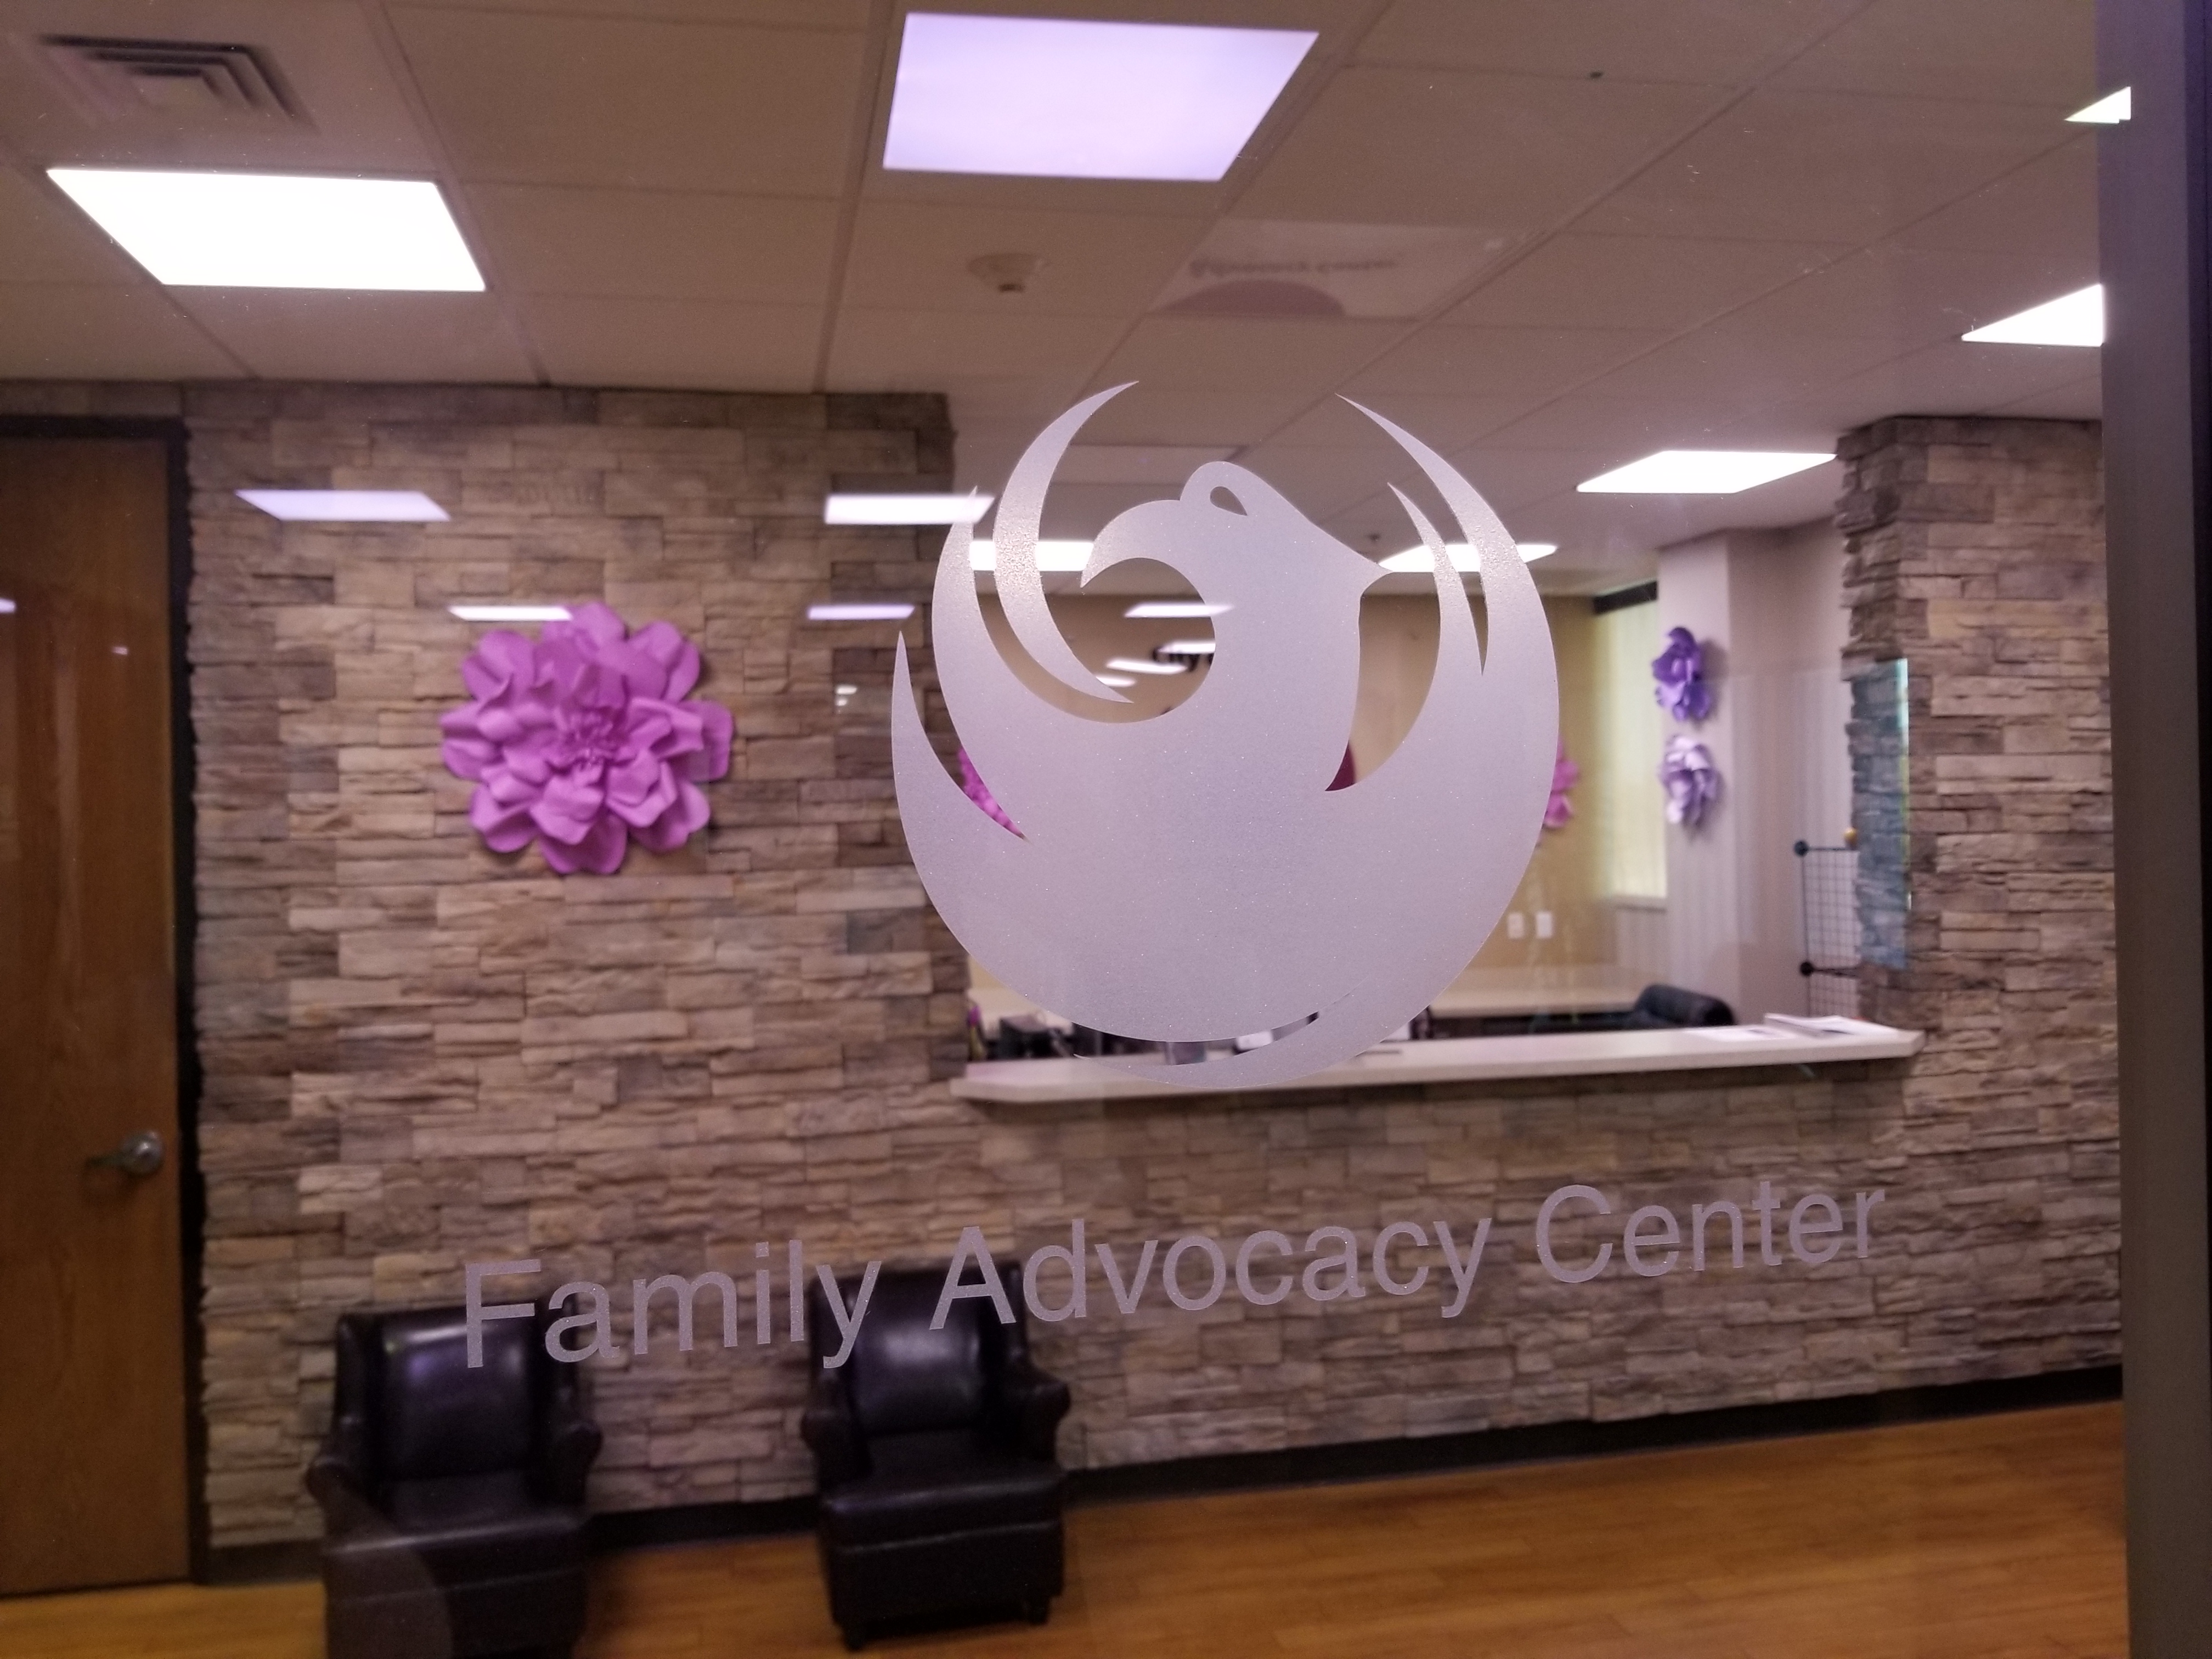 Family Advocacy Center front lobby scene